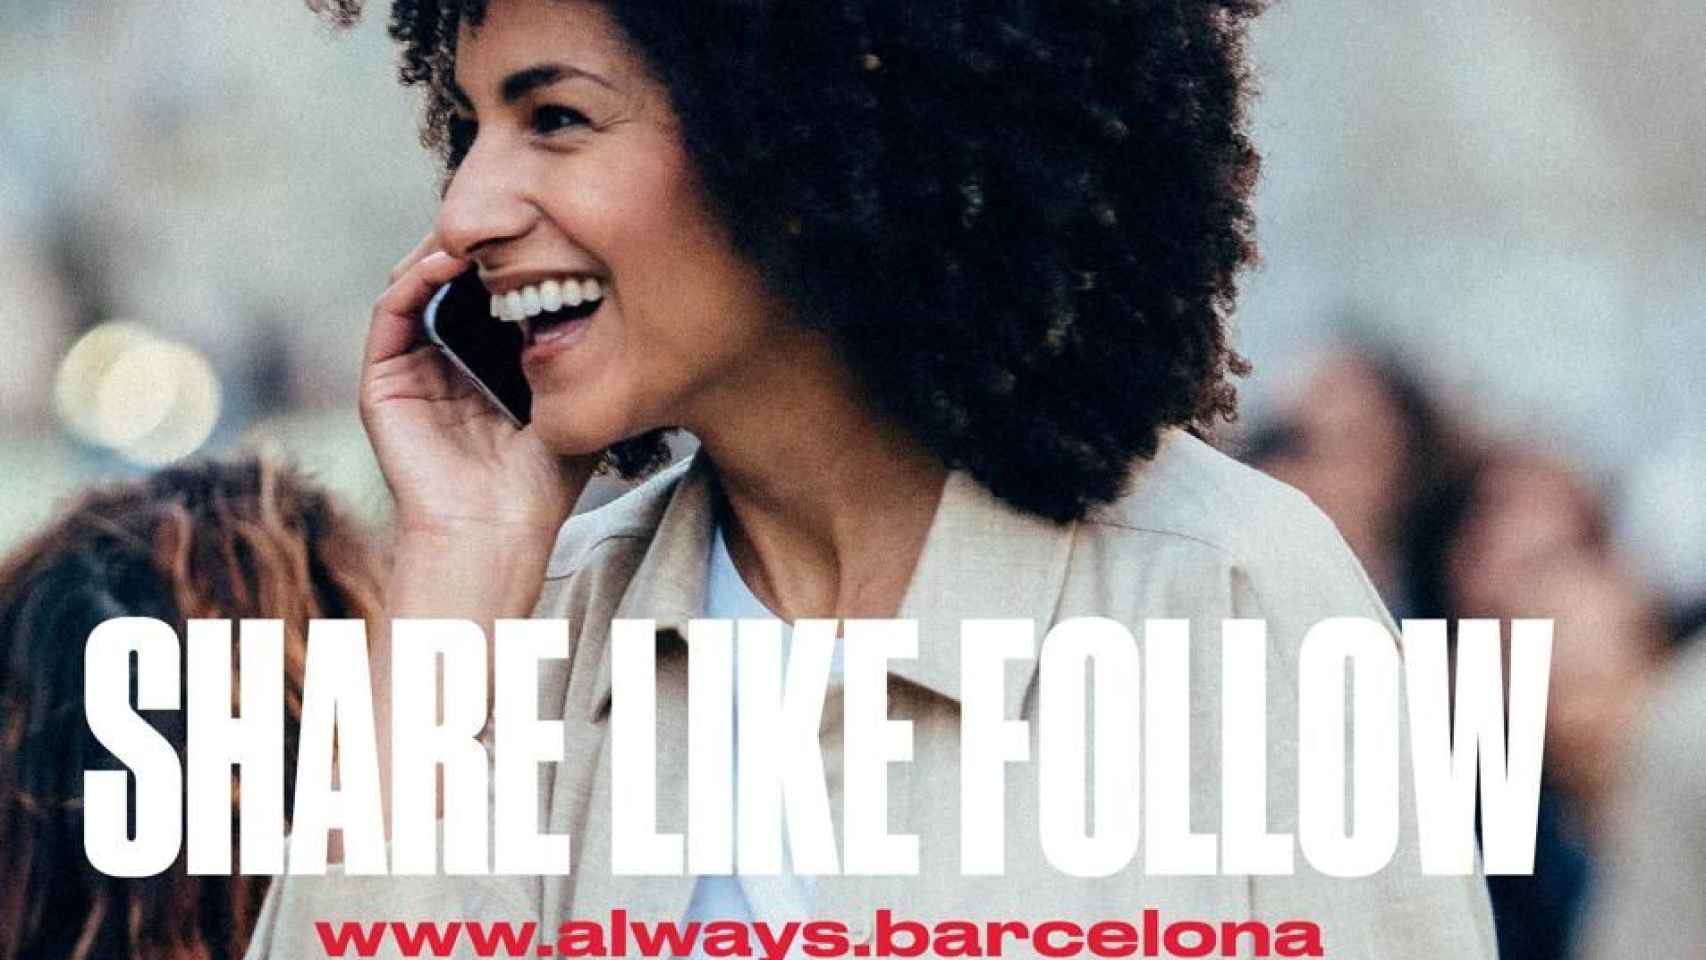 Imagen de la campaña 'Share, Like, Follow Barcelona' / CG